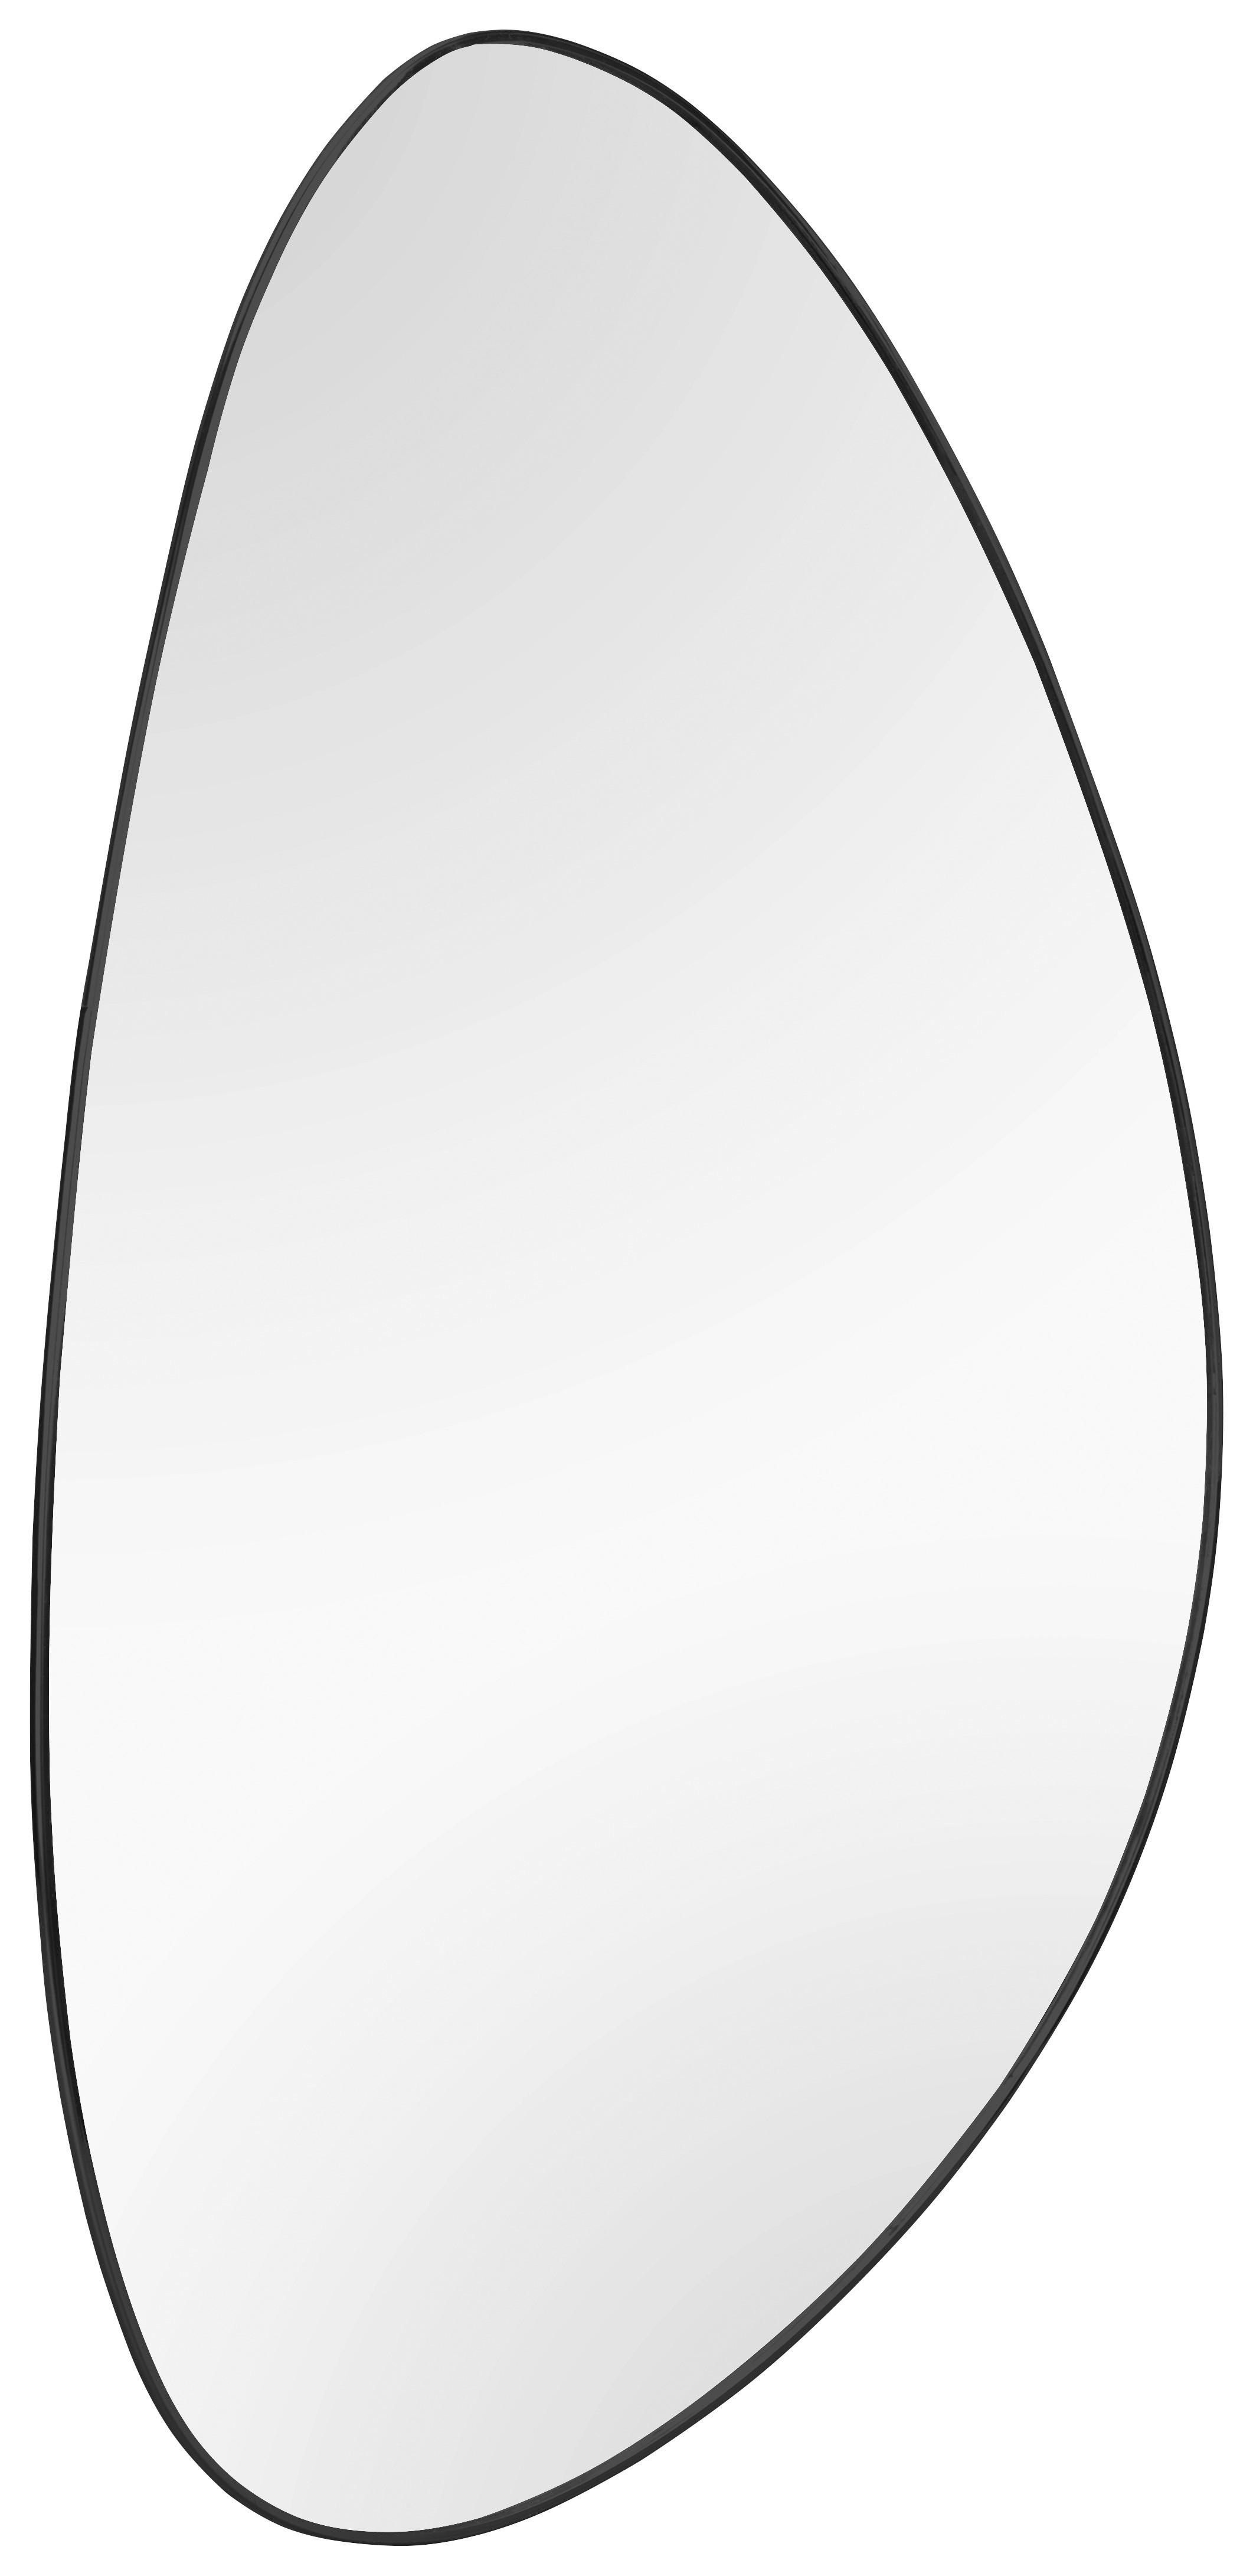 Nástěnné Zrcadlo Ida -Sb- - černá, Moderní, kov/sklo (40/60cm) - Modern Living